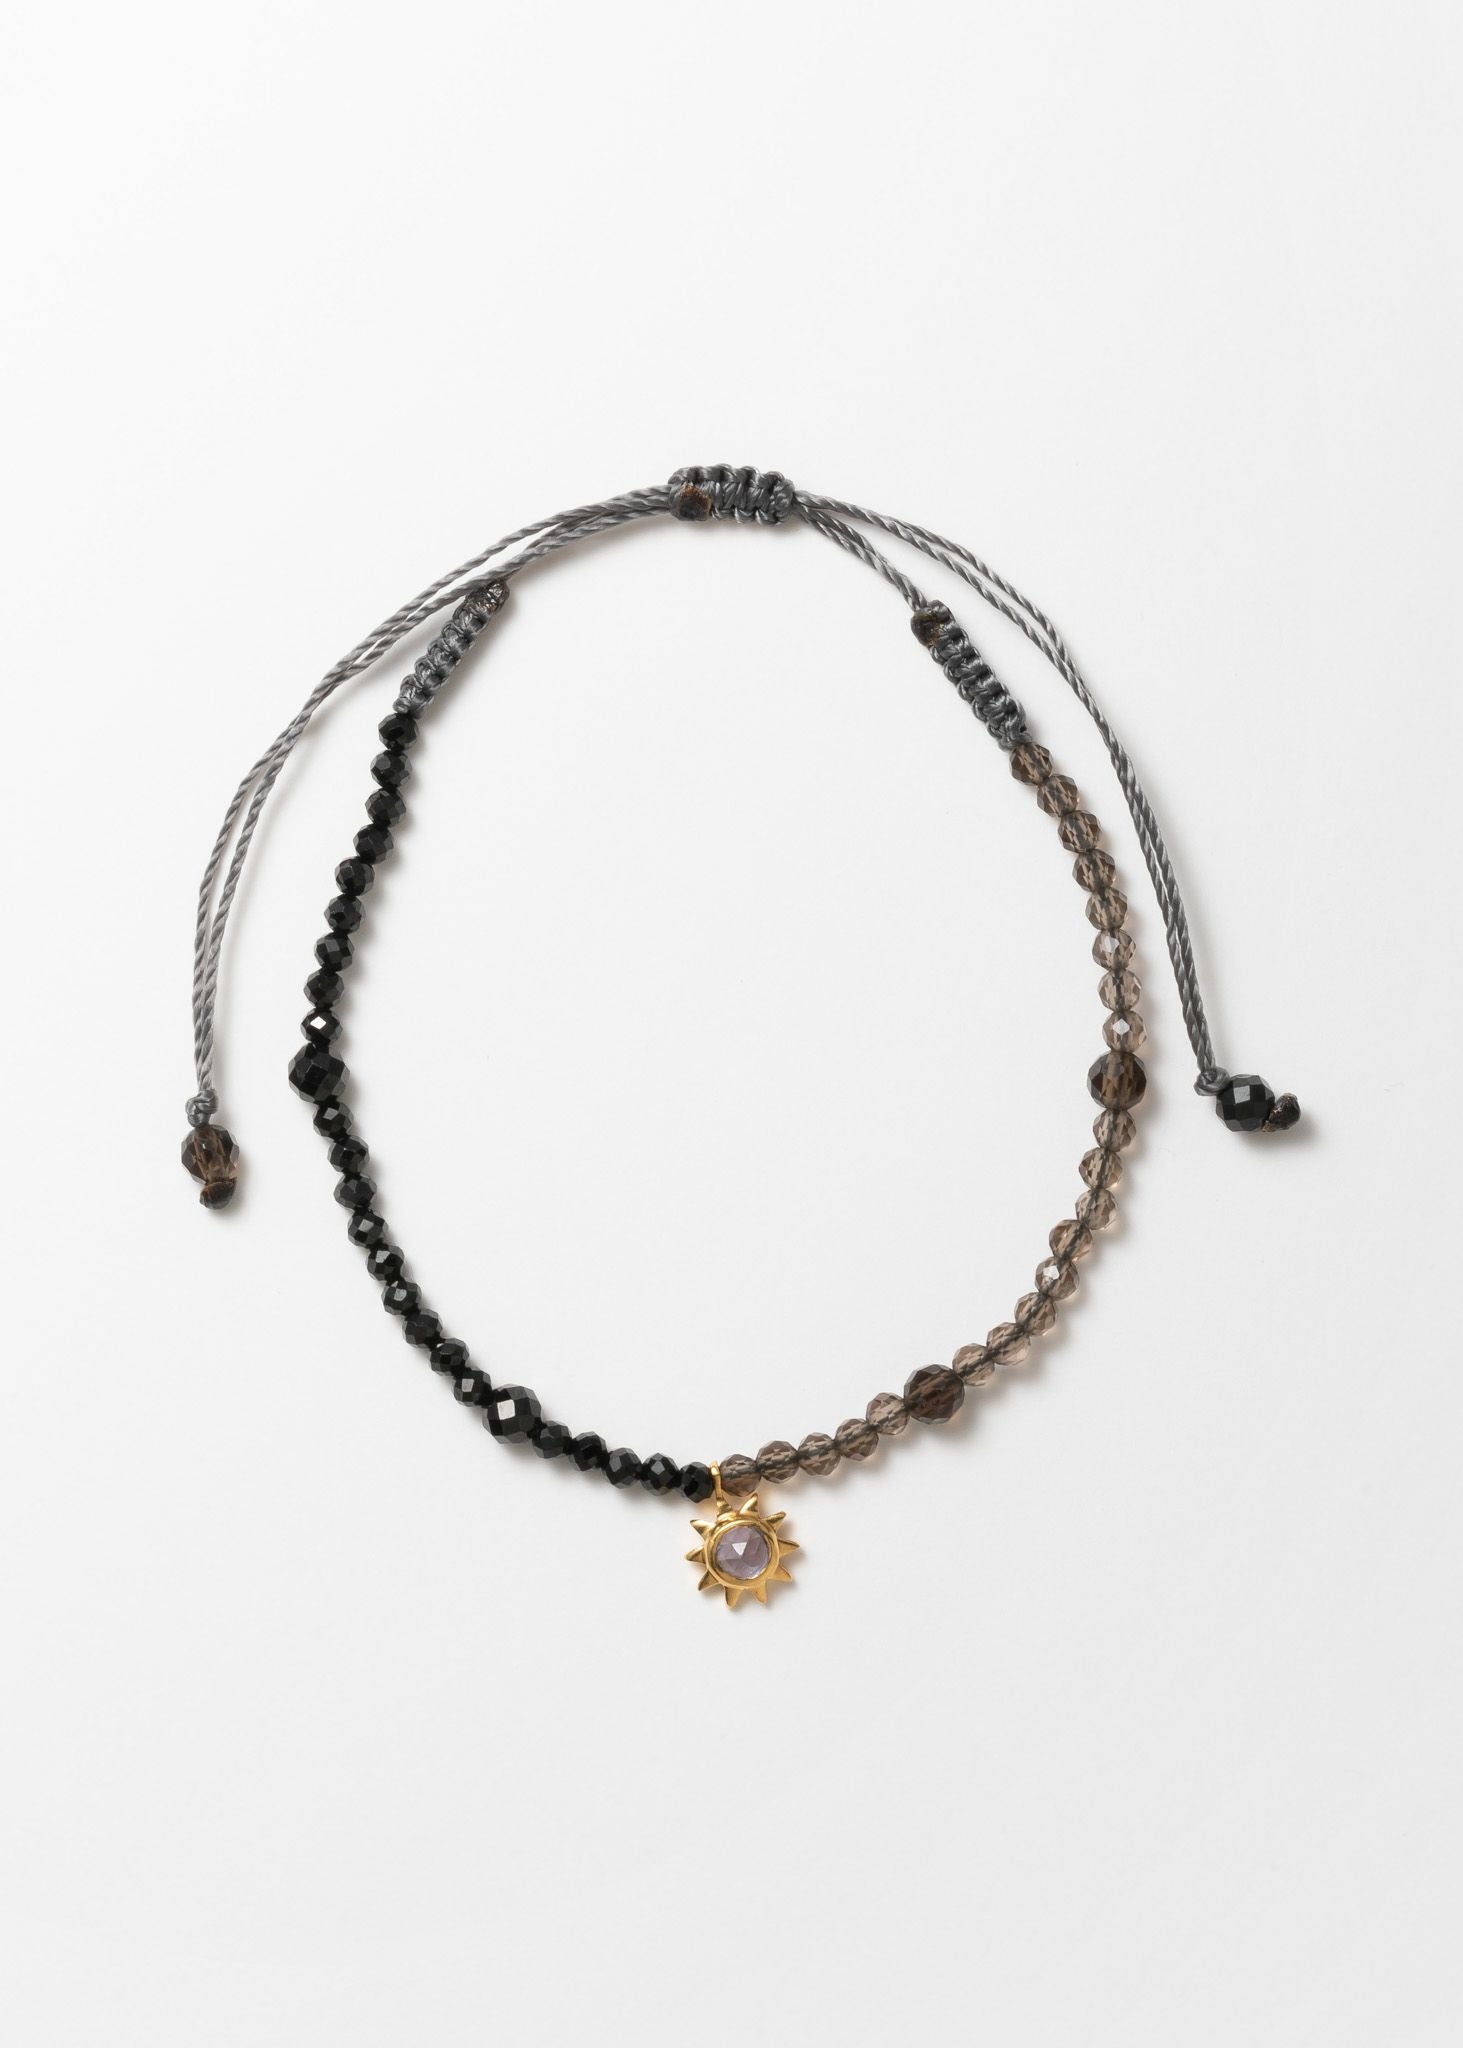 Capricorn -山羊座- Beads Bracelet With Charm